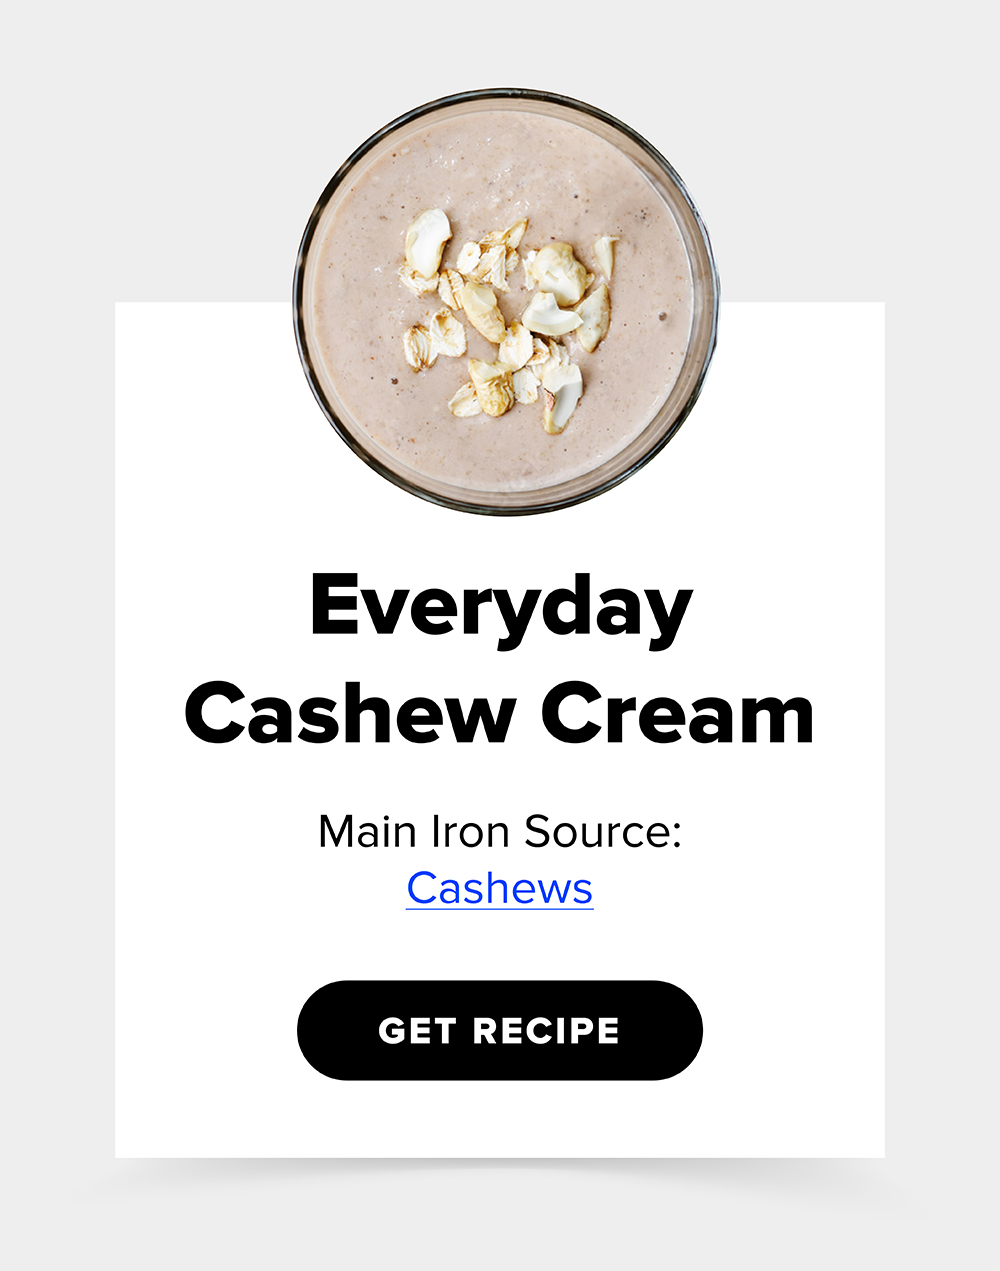 Iron-Rich Cashew Cream Recipe